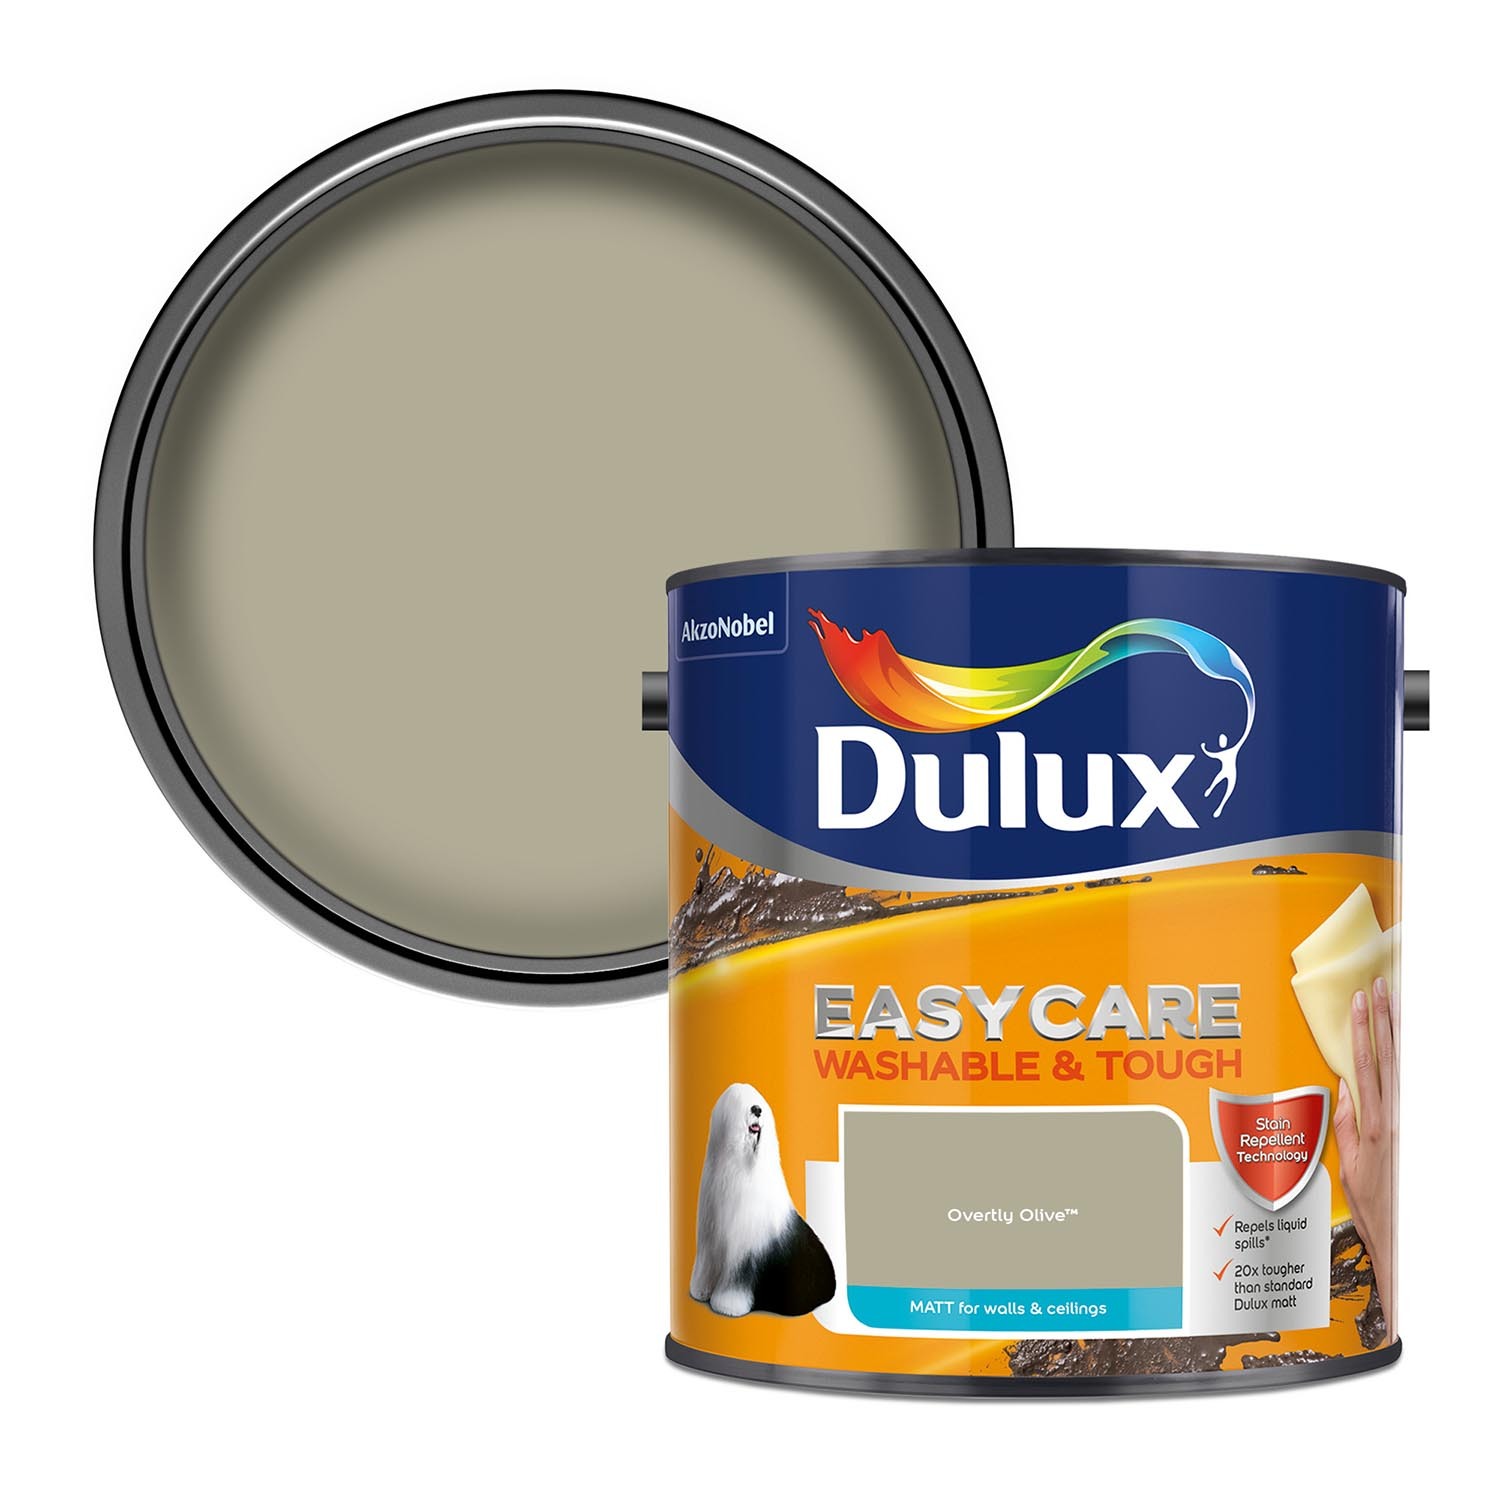 Dulux Easycare Washable and Tough Overtly Olive Matt Emulsion Paint Image 1